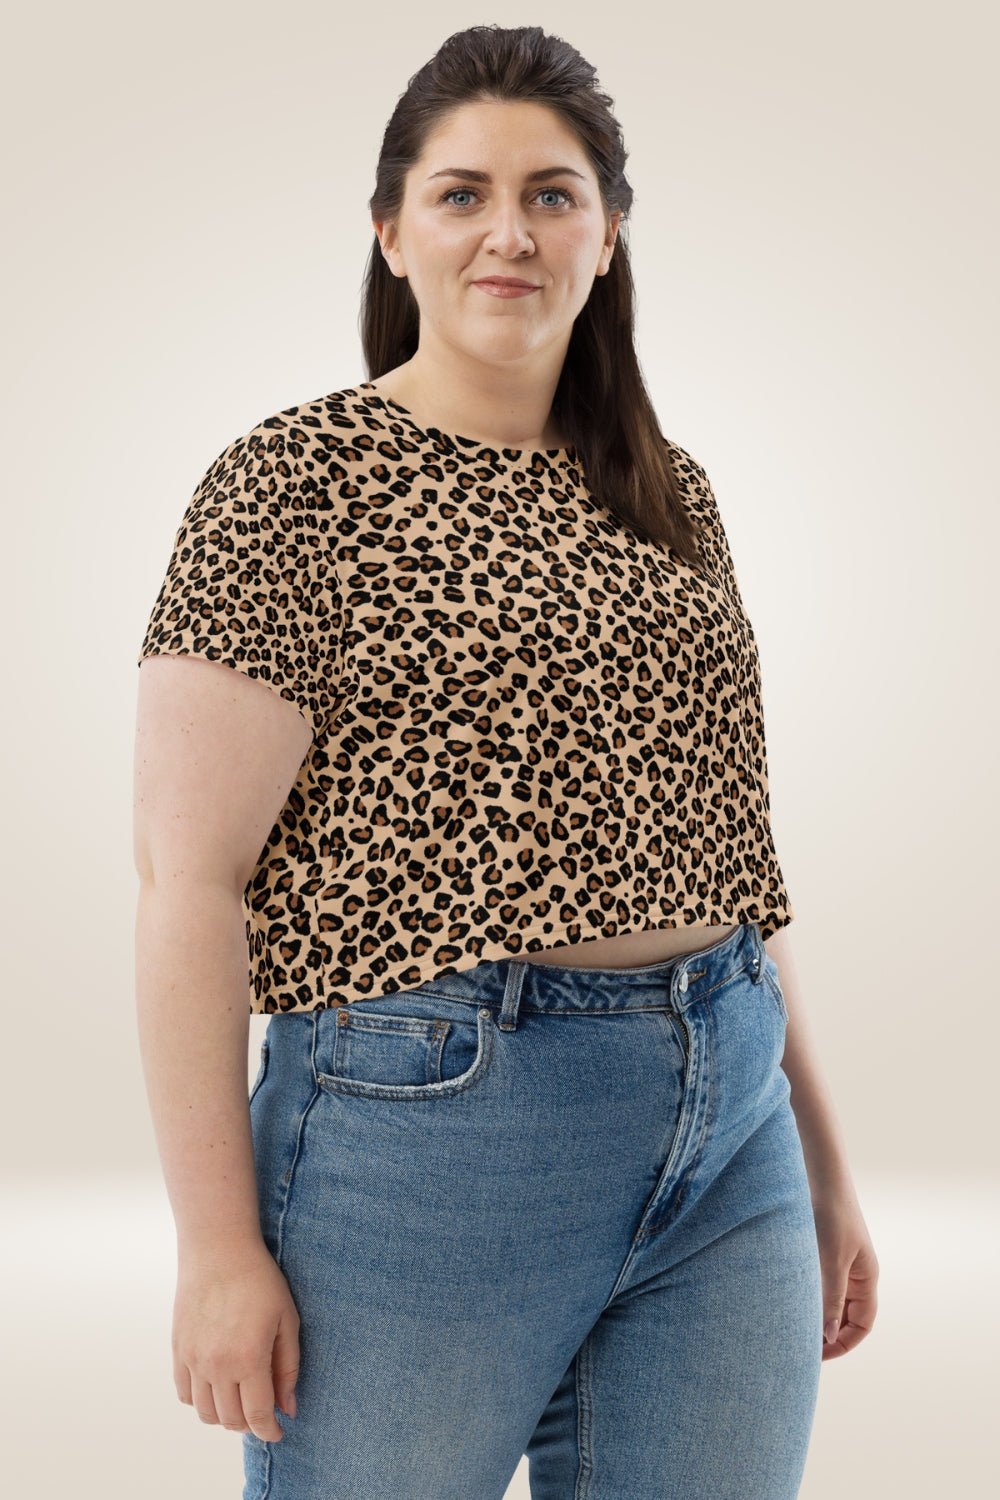 Leopard Print Crop Top T Shirt - TGC Boutique - Crop Top